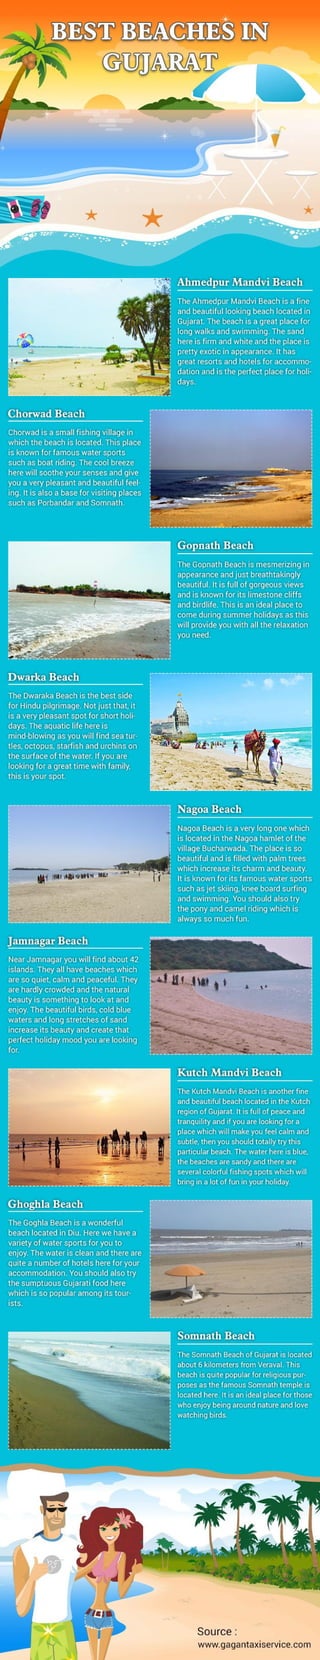 Best Beaches in Gujarat